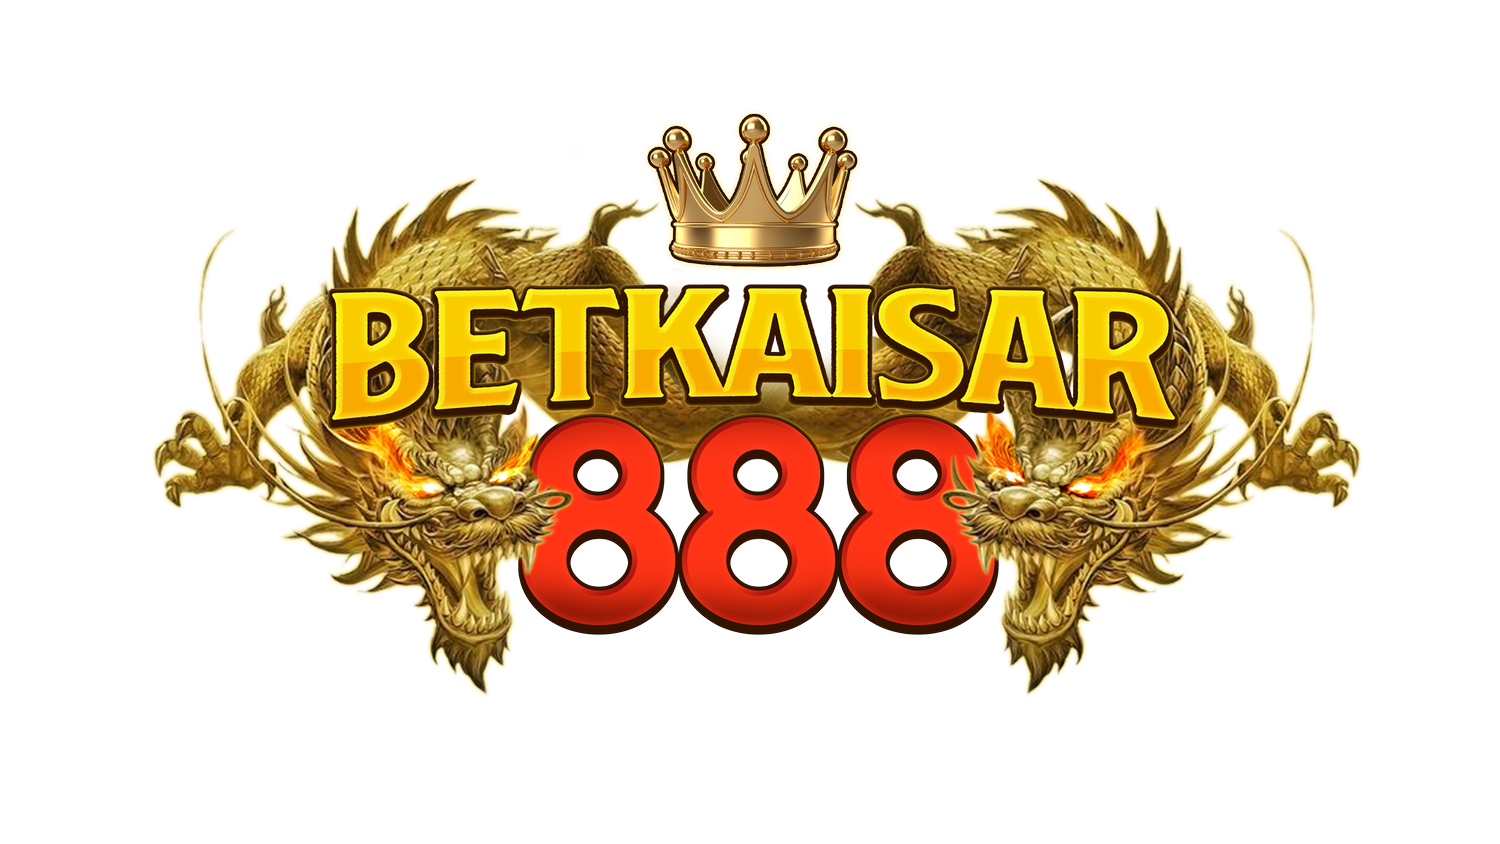 BETKAISAR888